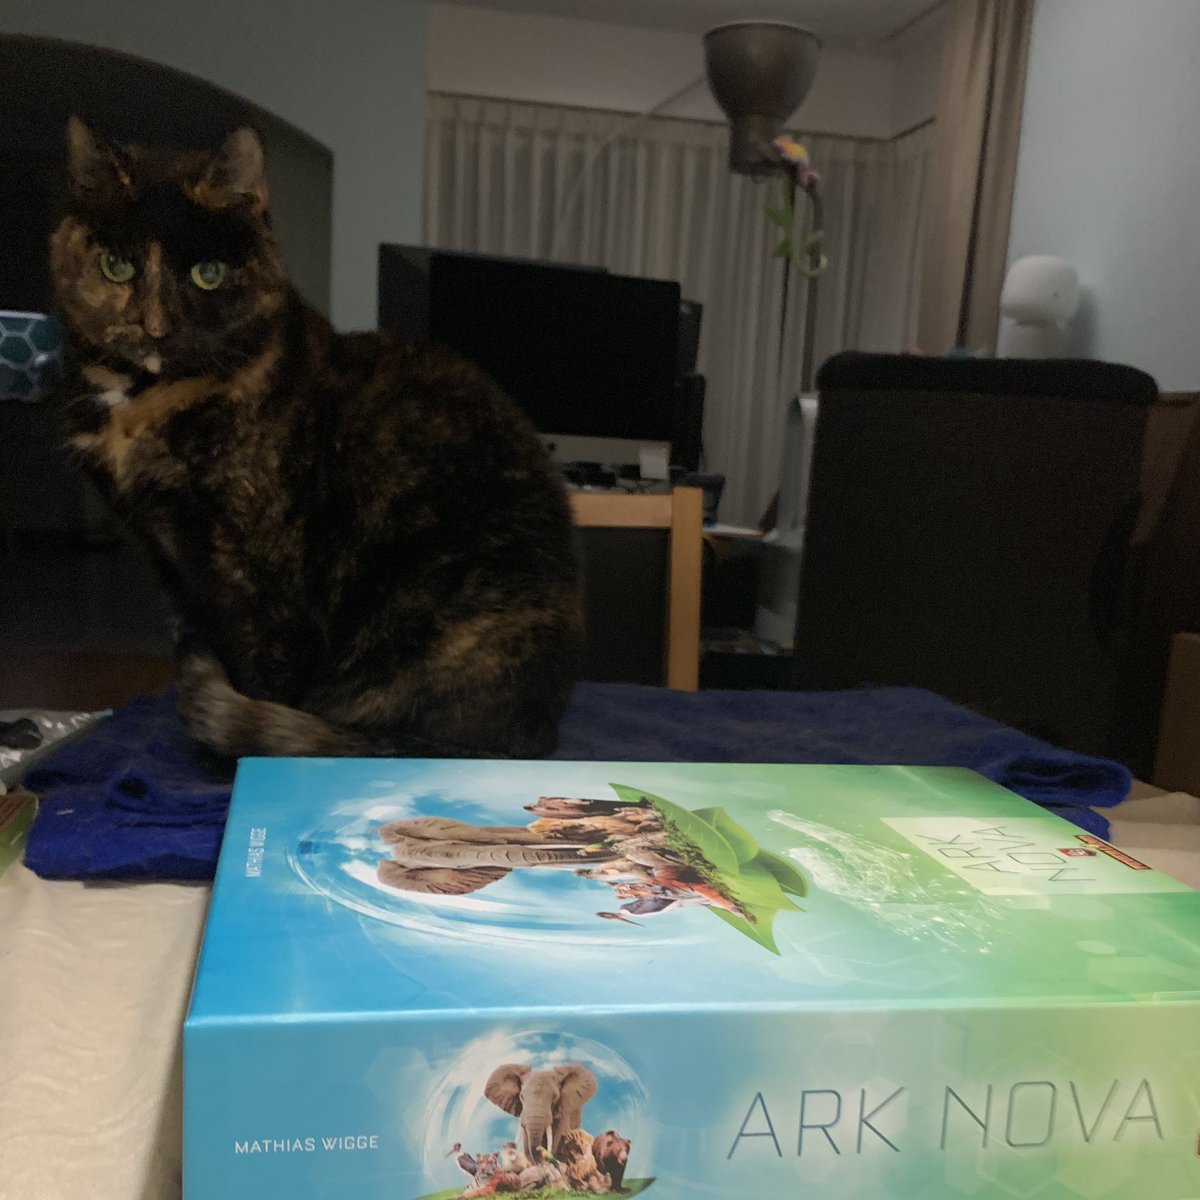 Ark Nova we missed you! #ArkNova